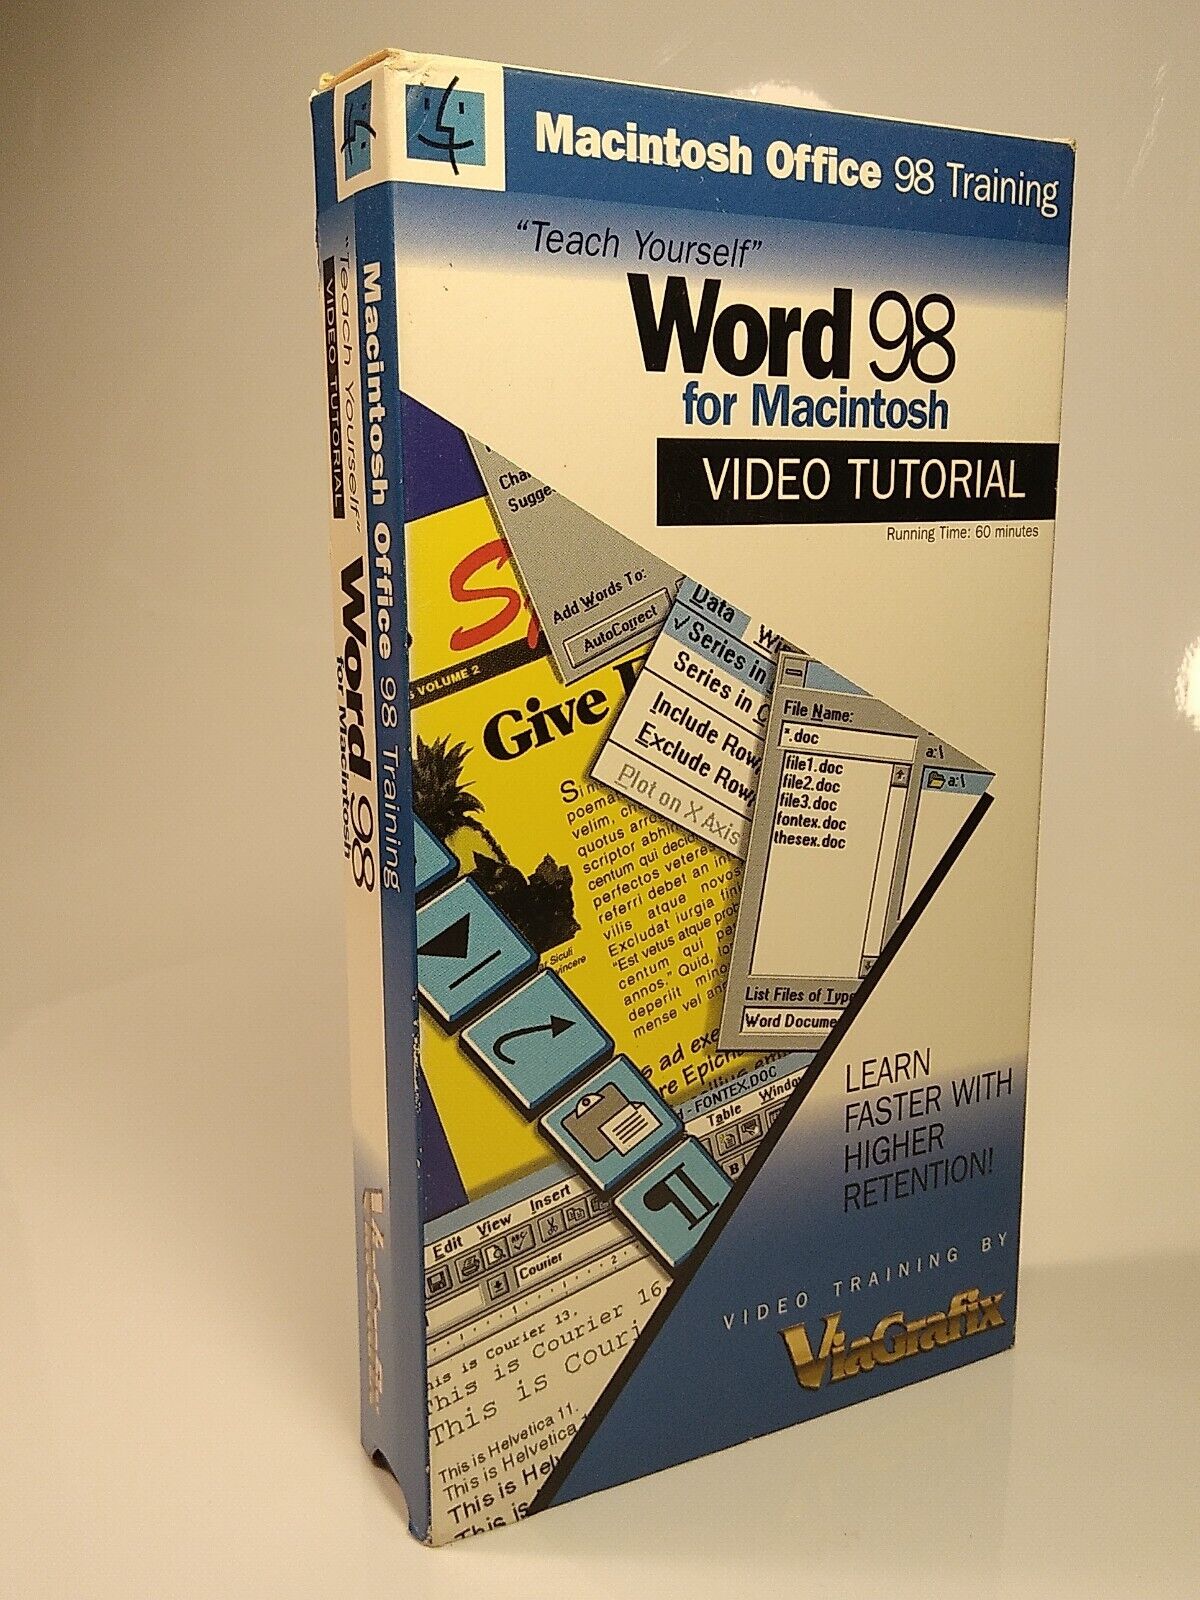 Word 98 Training For Macintosh VHS Video Training by ViaGrafix